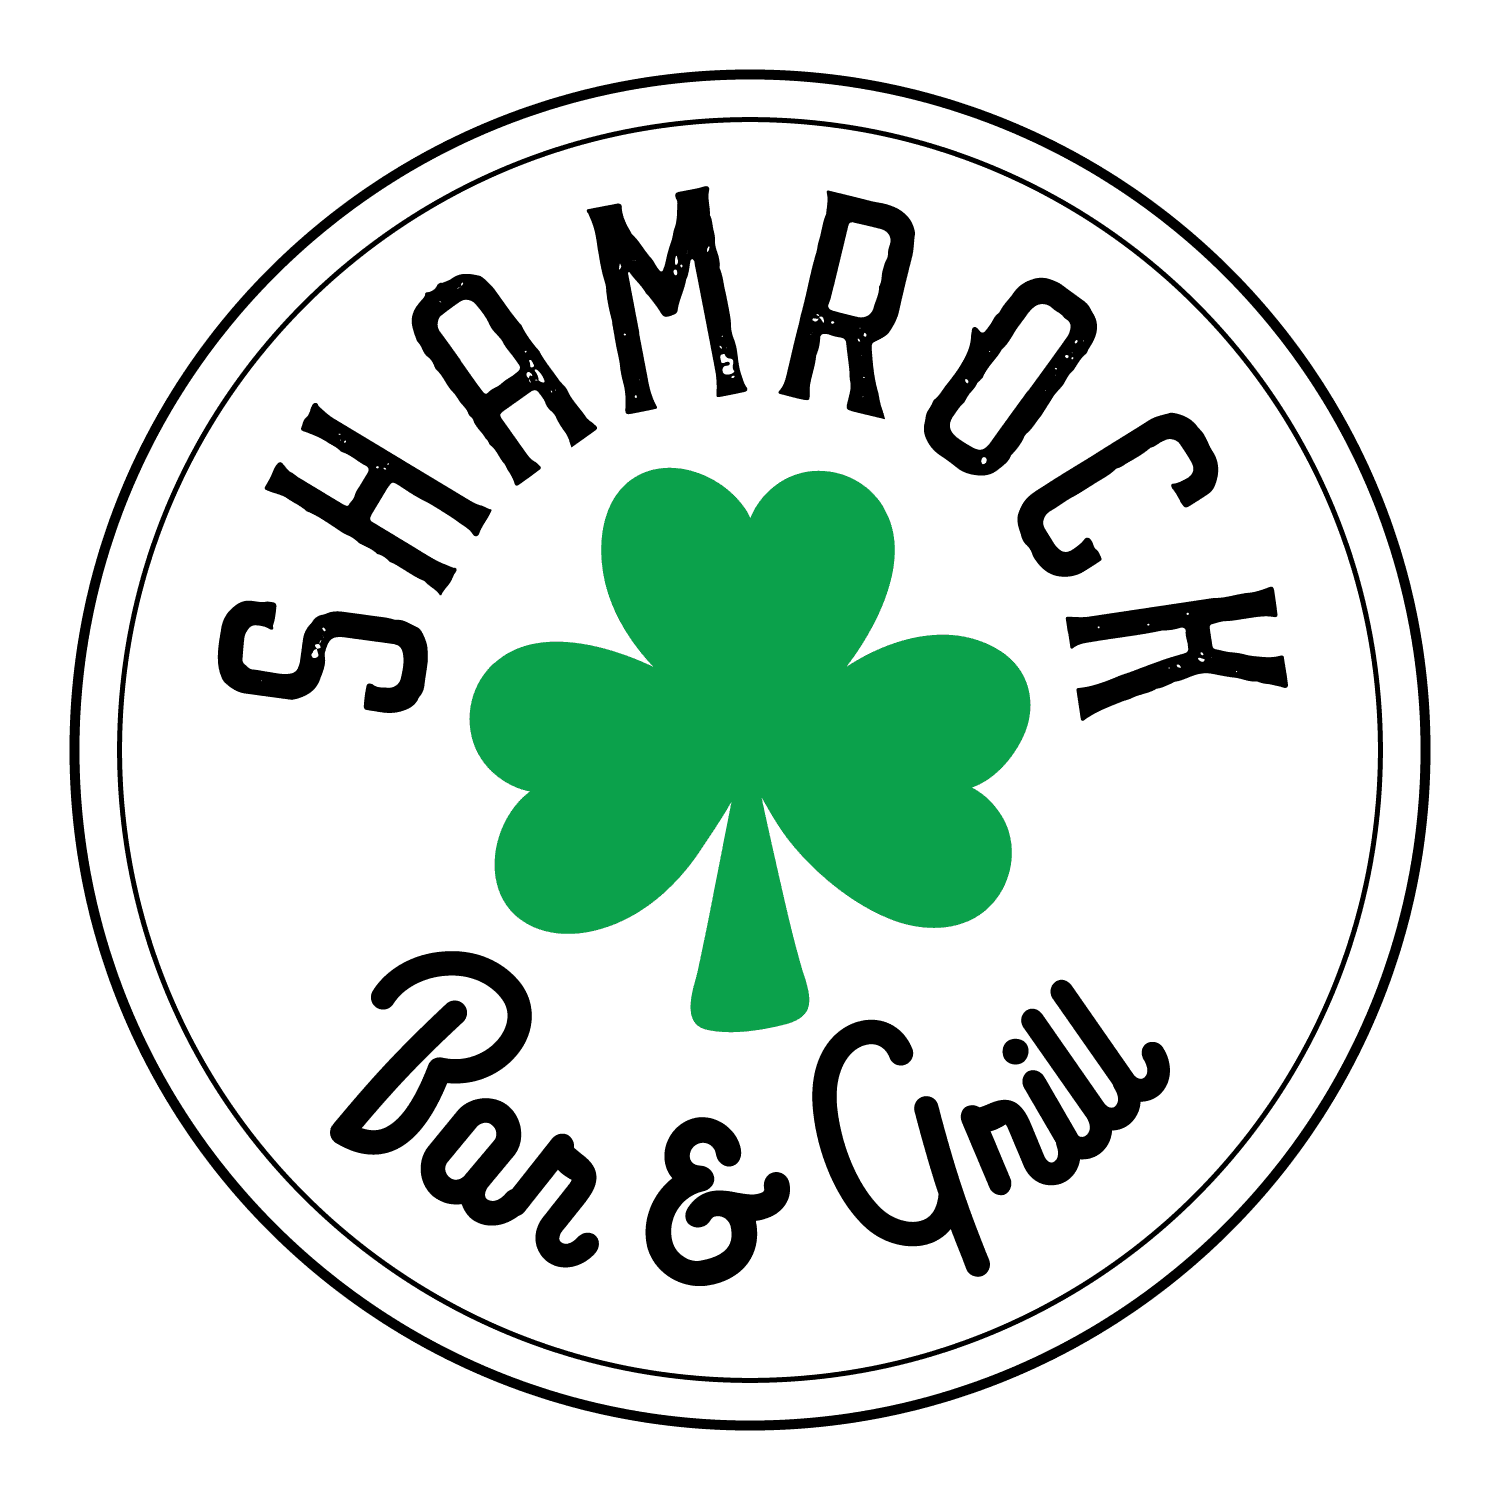 shamrock bar & grill logo